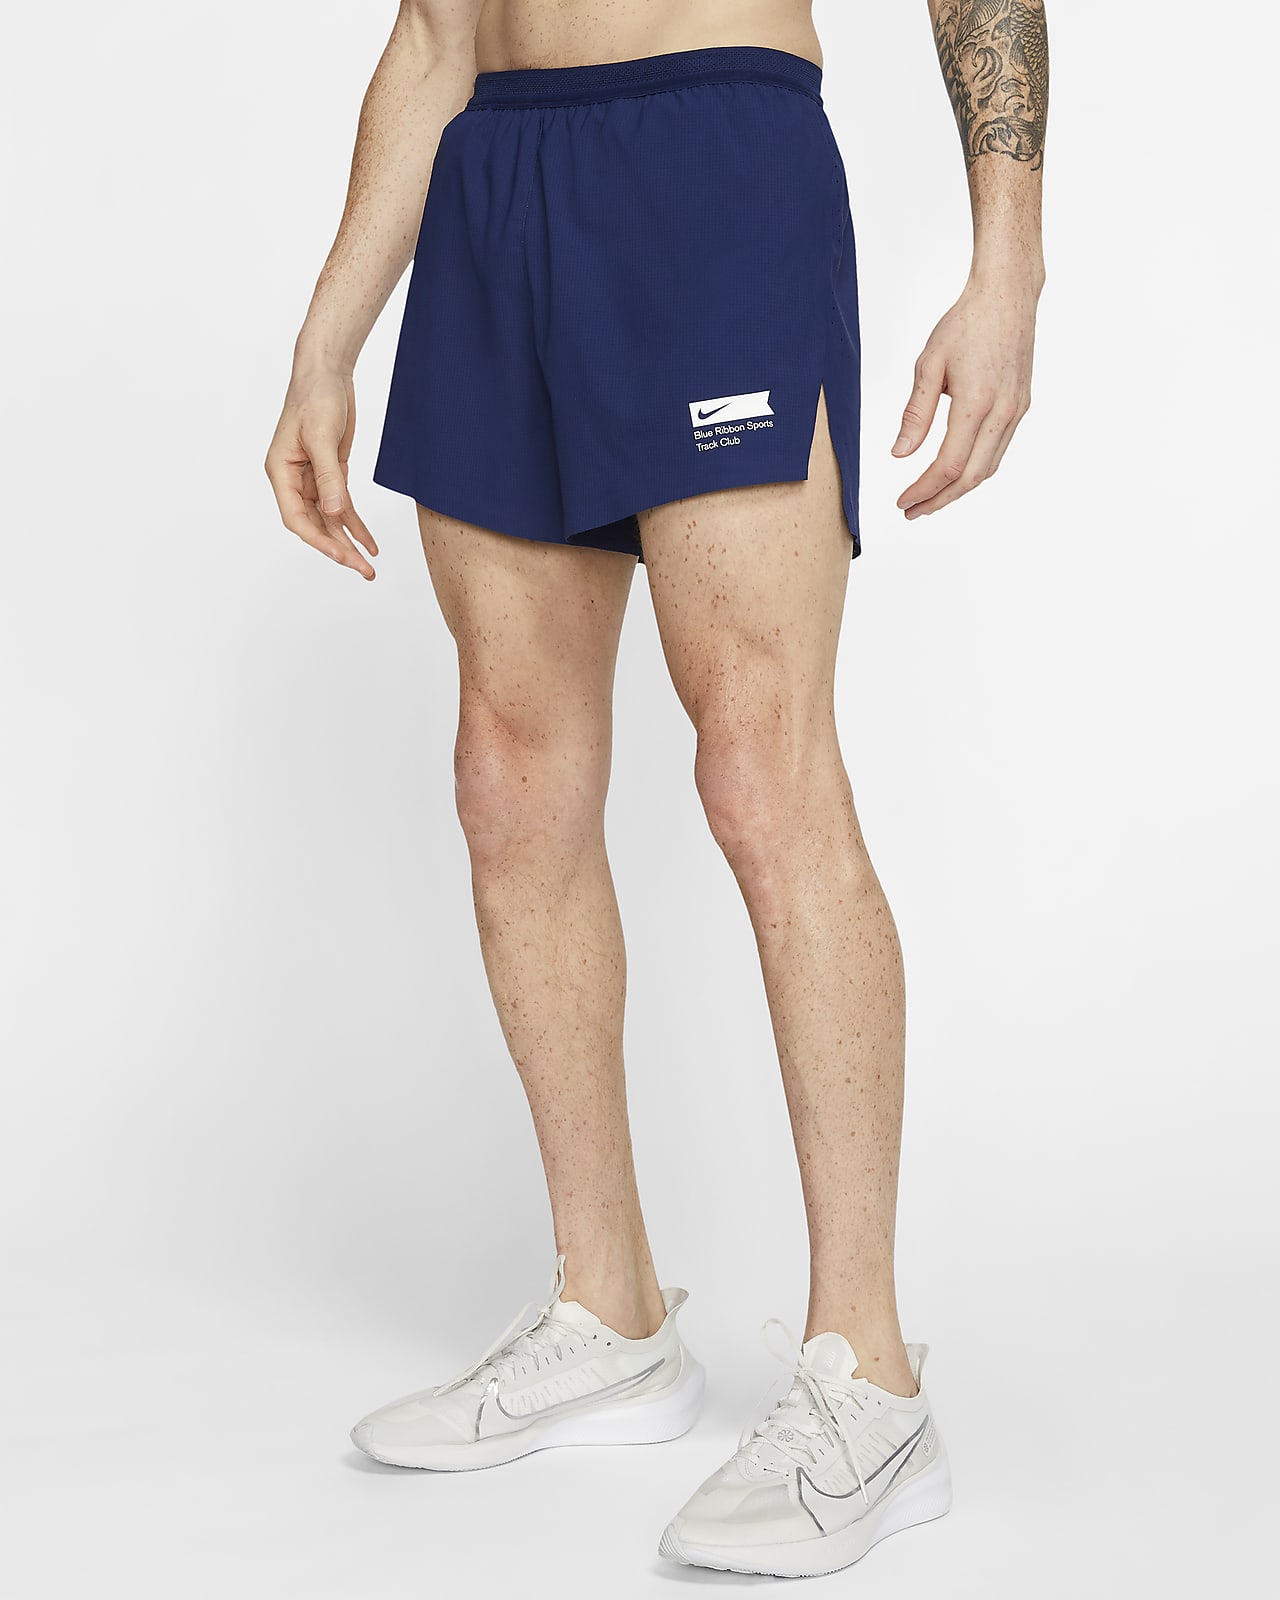 blue nike running shorts